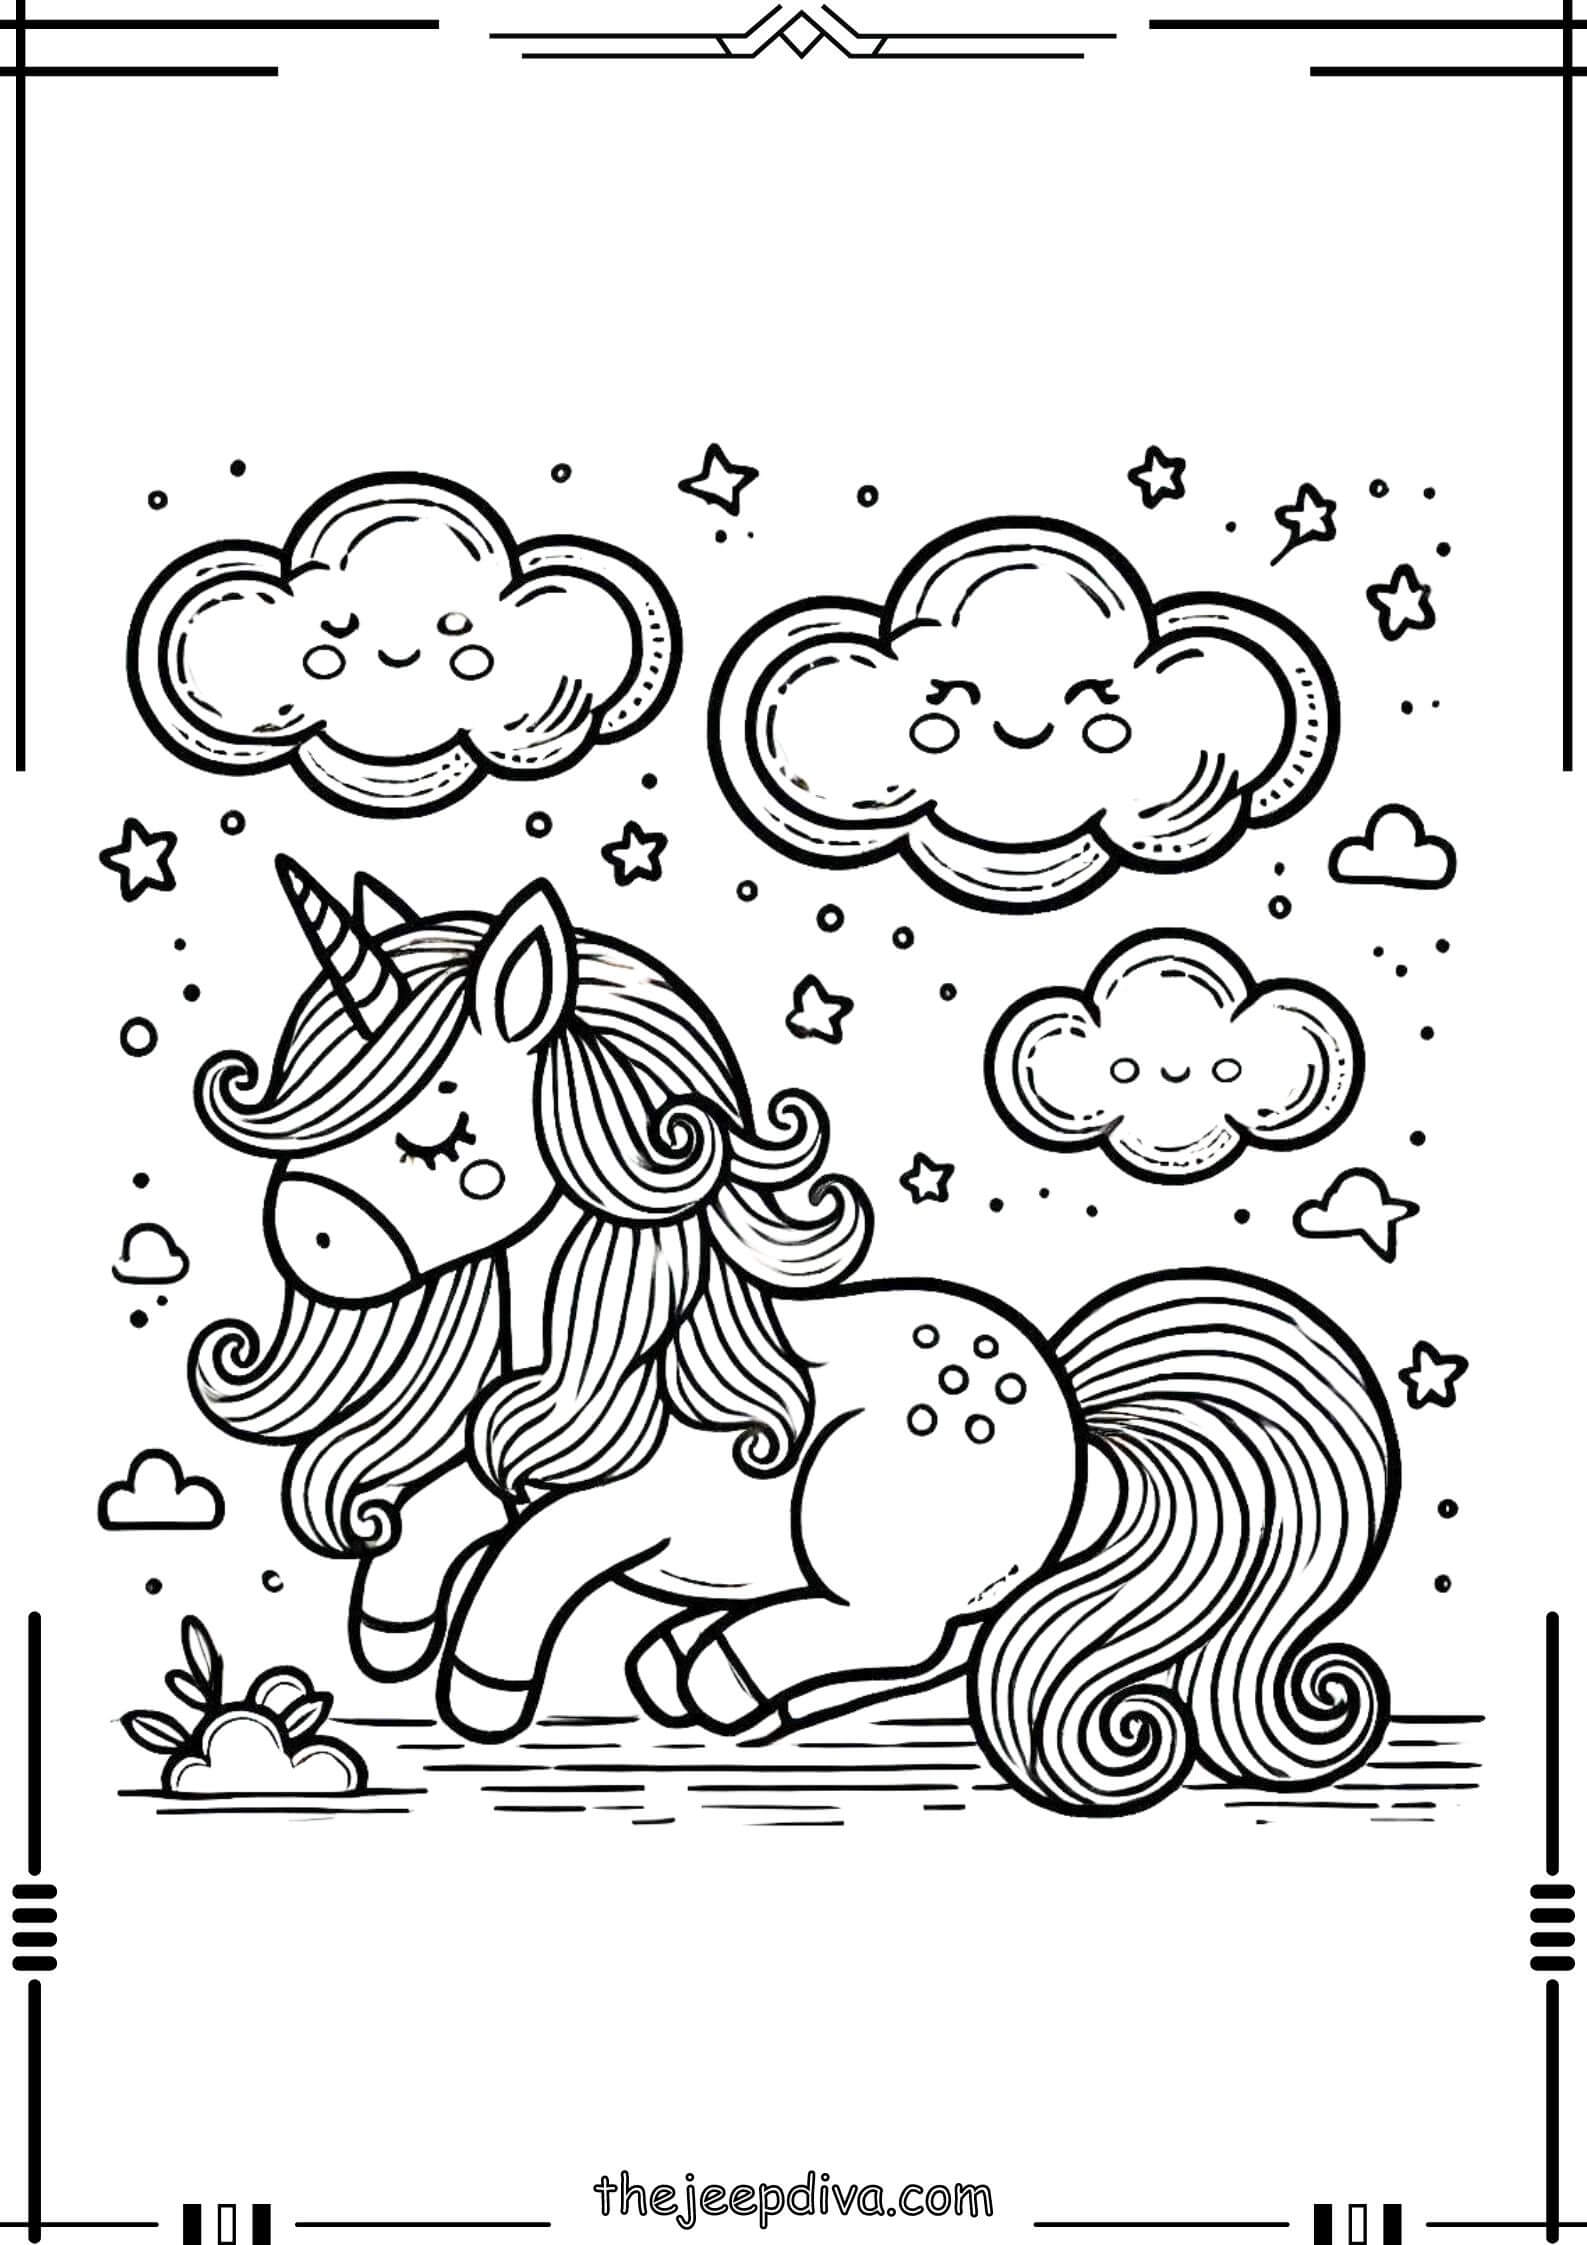 unicorn-coloring-page-medium-9